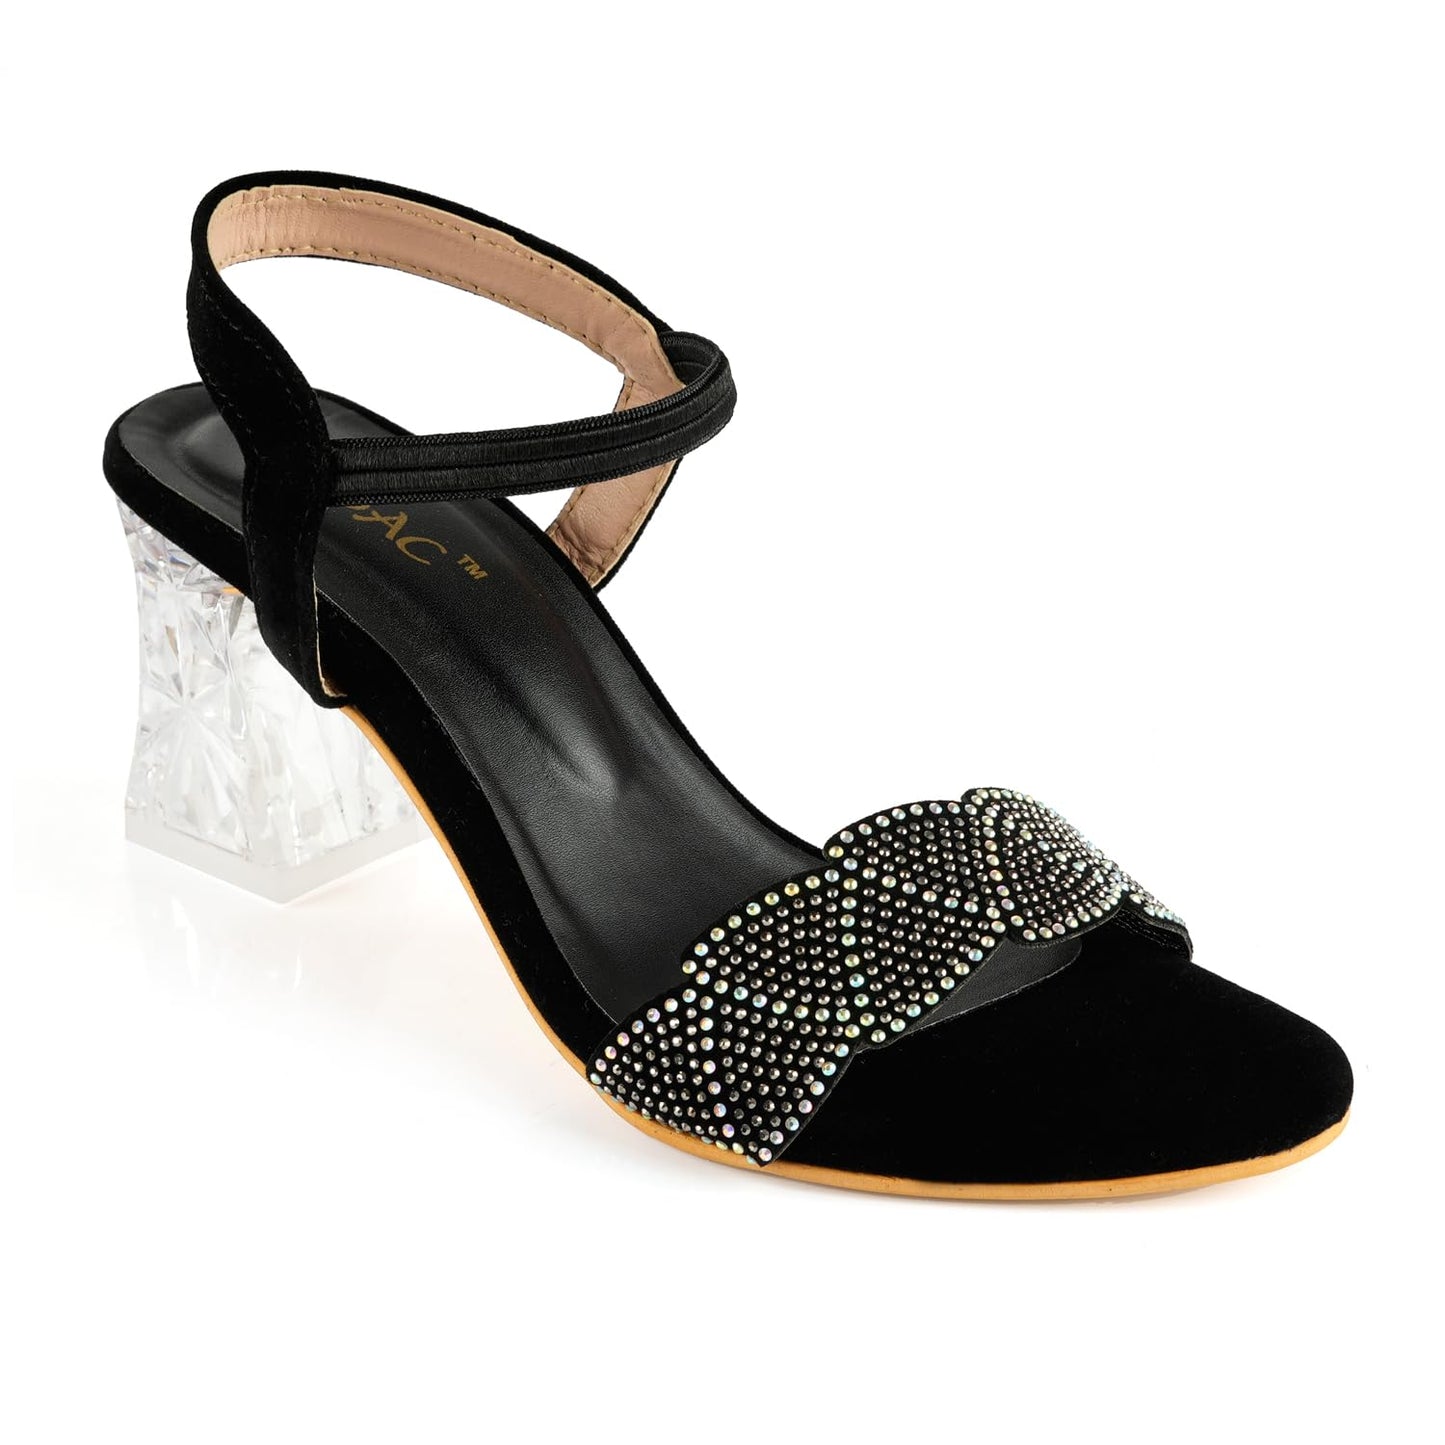 MOSAC Women's Block Heels Fashion Sandals Wedding Sandals for Women & Girls (Black)